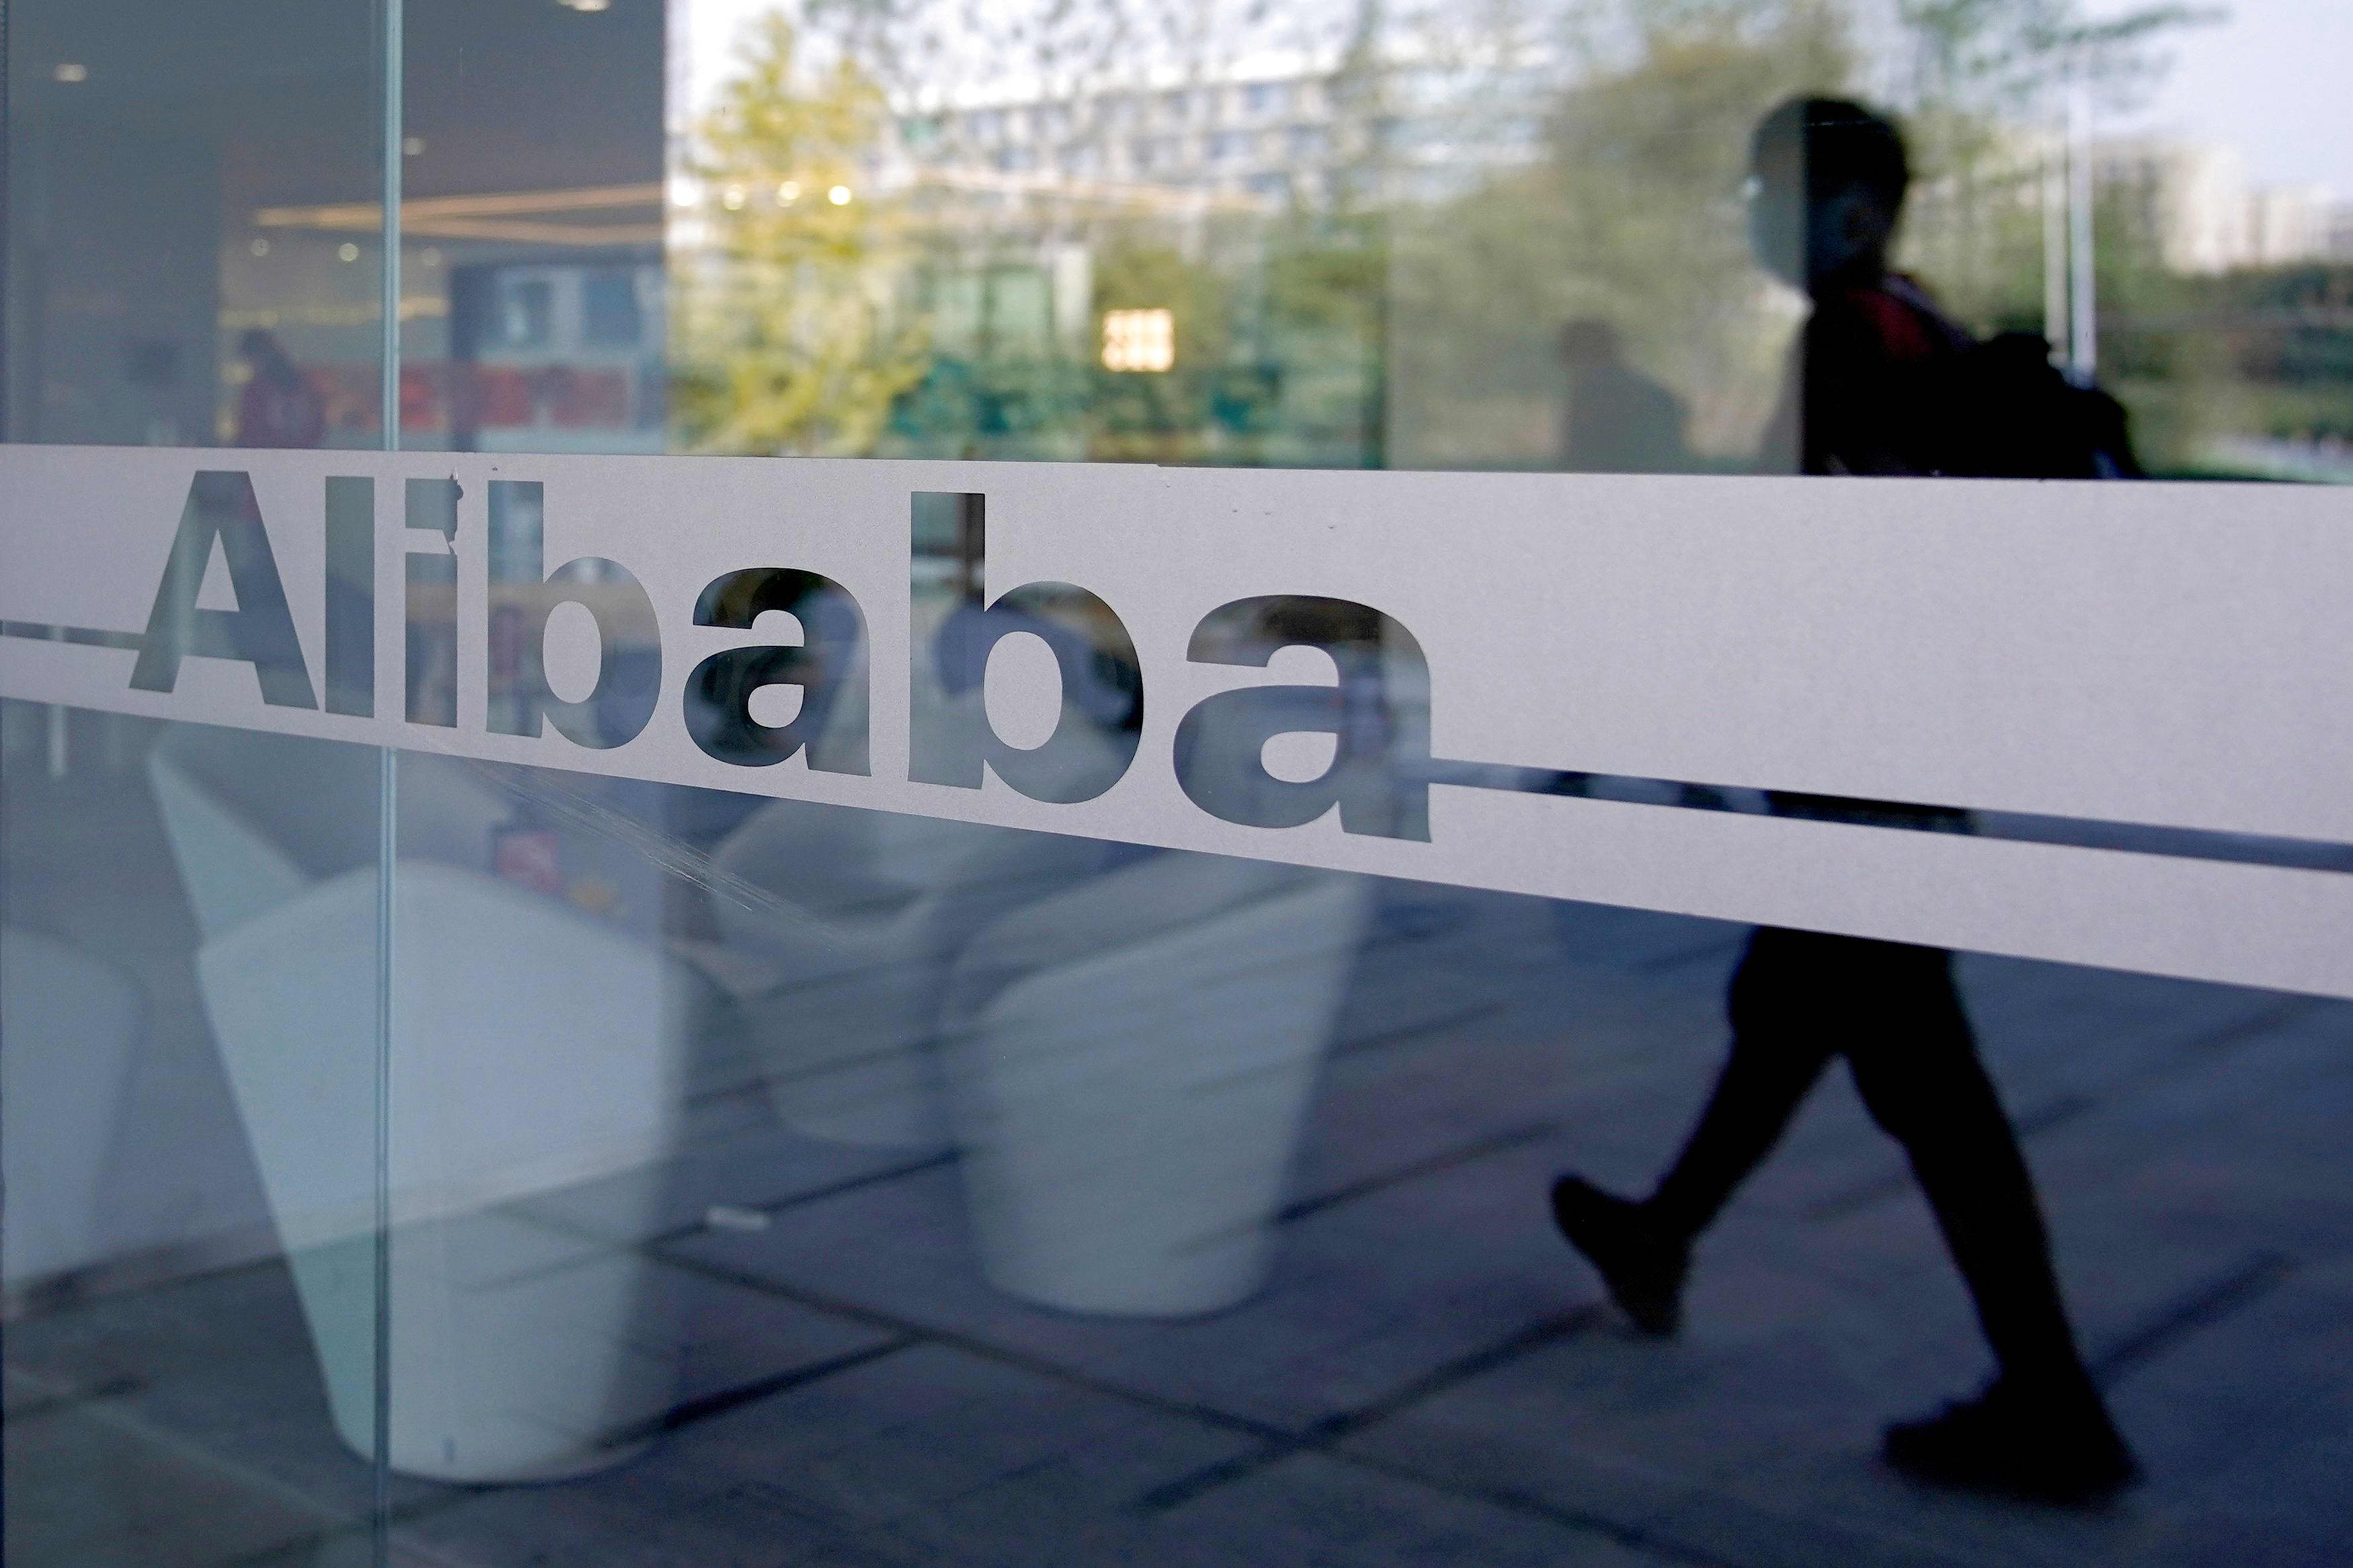 Alibaba shares jumped after the $ 2.8 billion antitrust fine